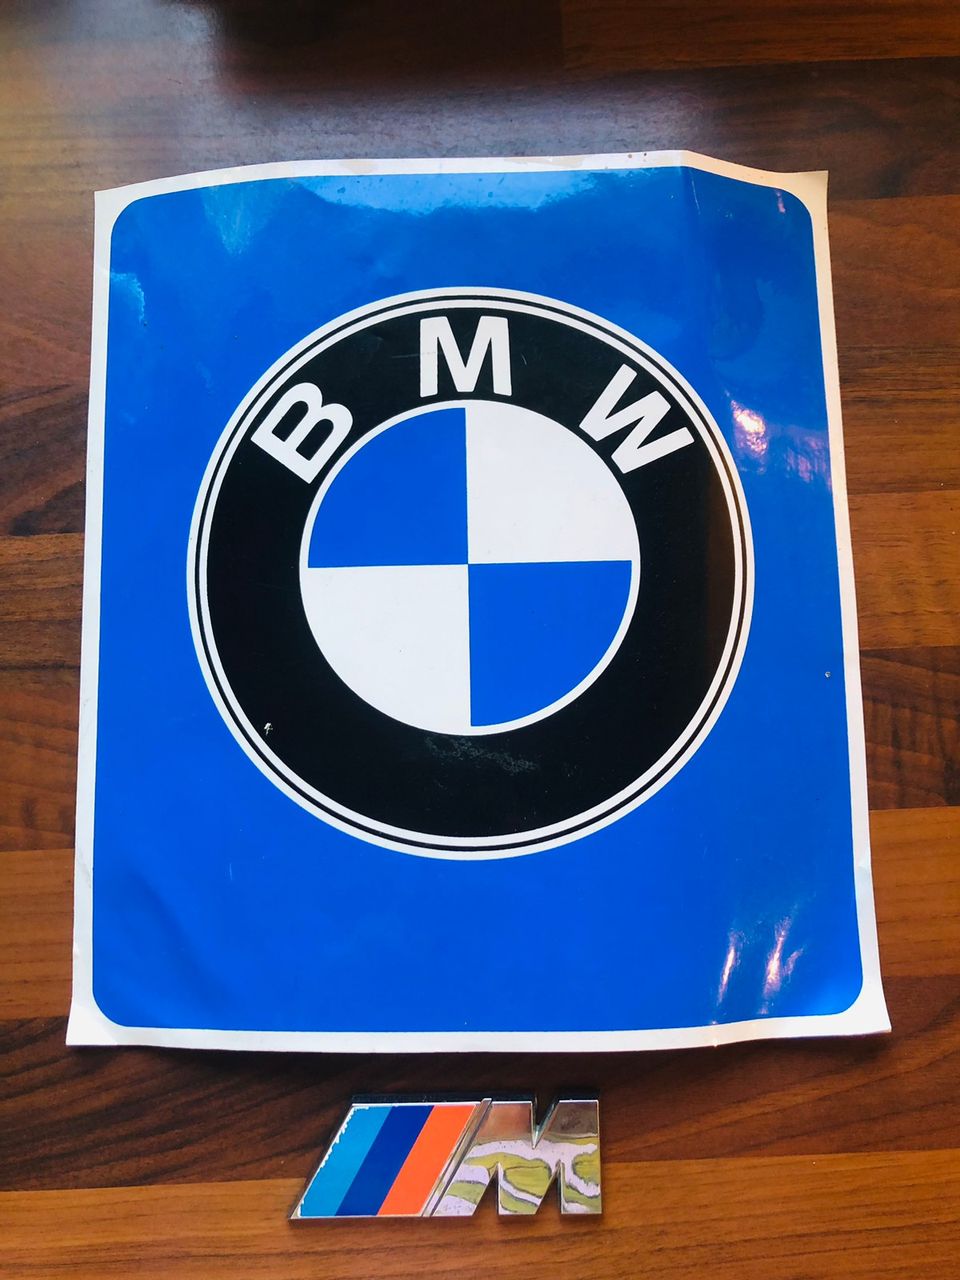 BMW M-merkki ja tarra